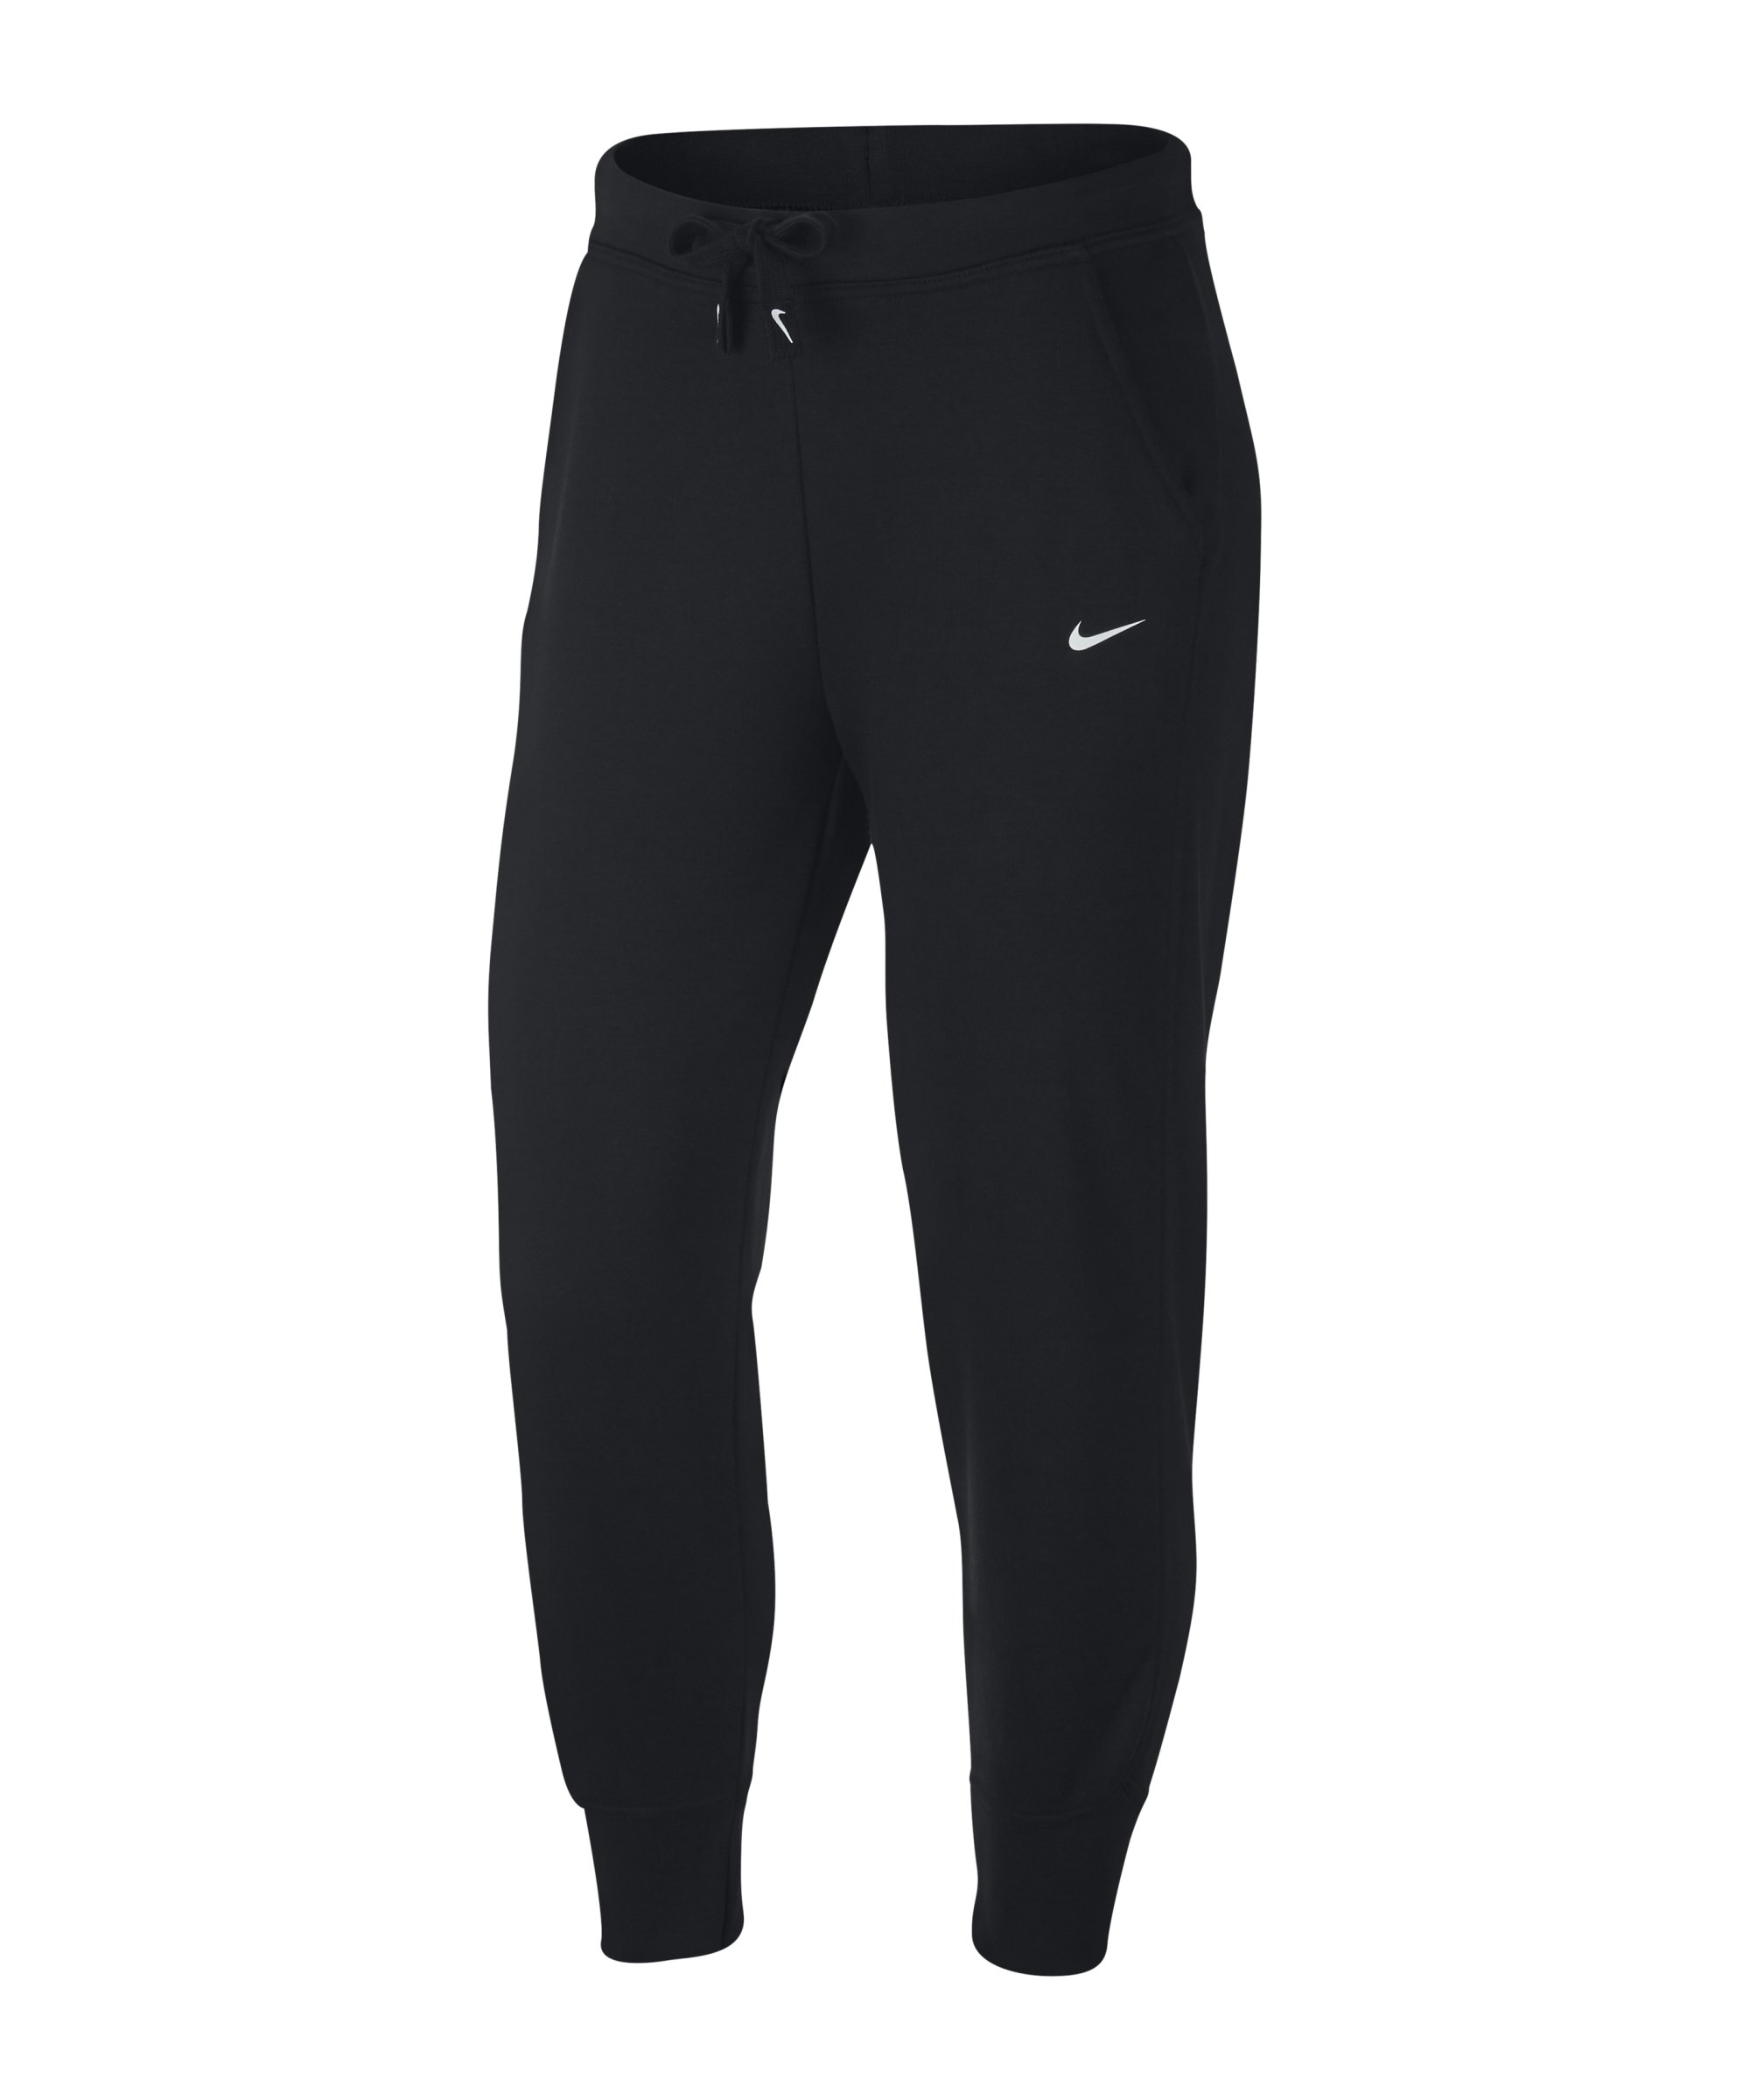 Nike Get Fit Trainingshose Damen Schwarz F010 - schwarz